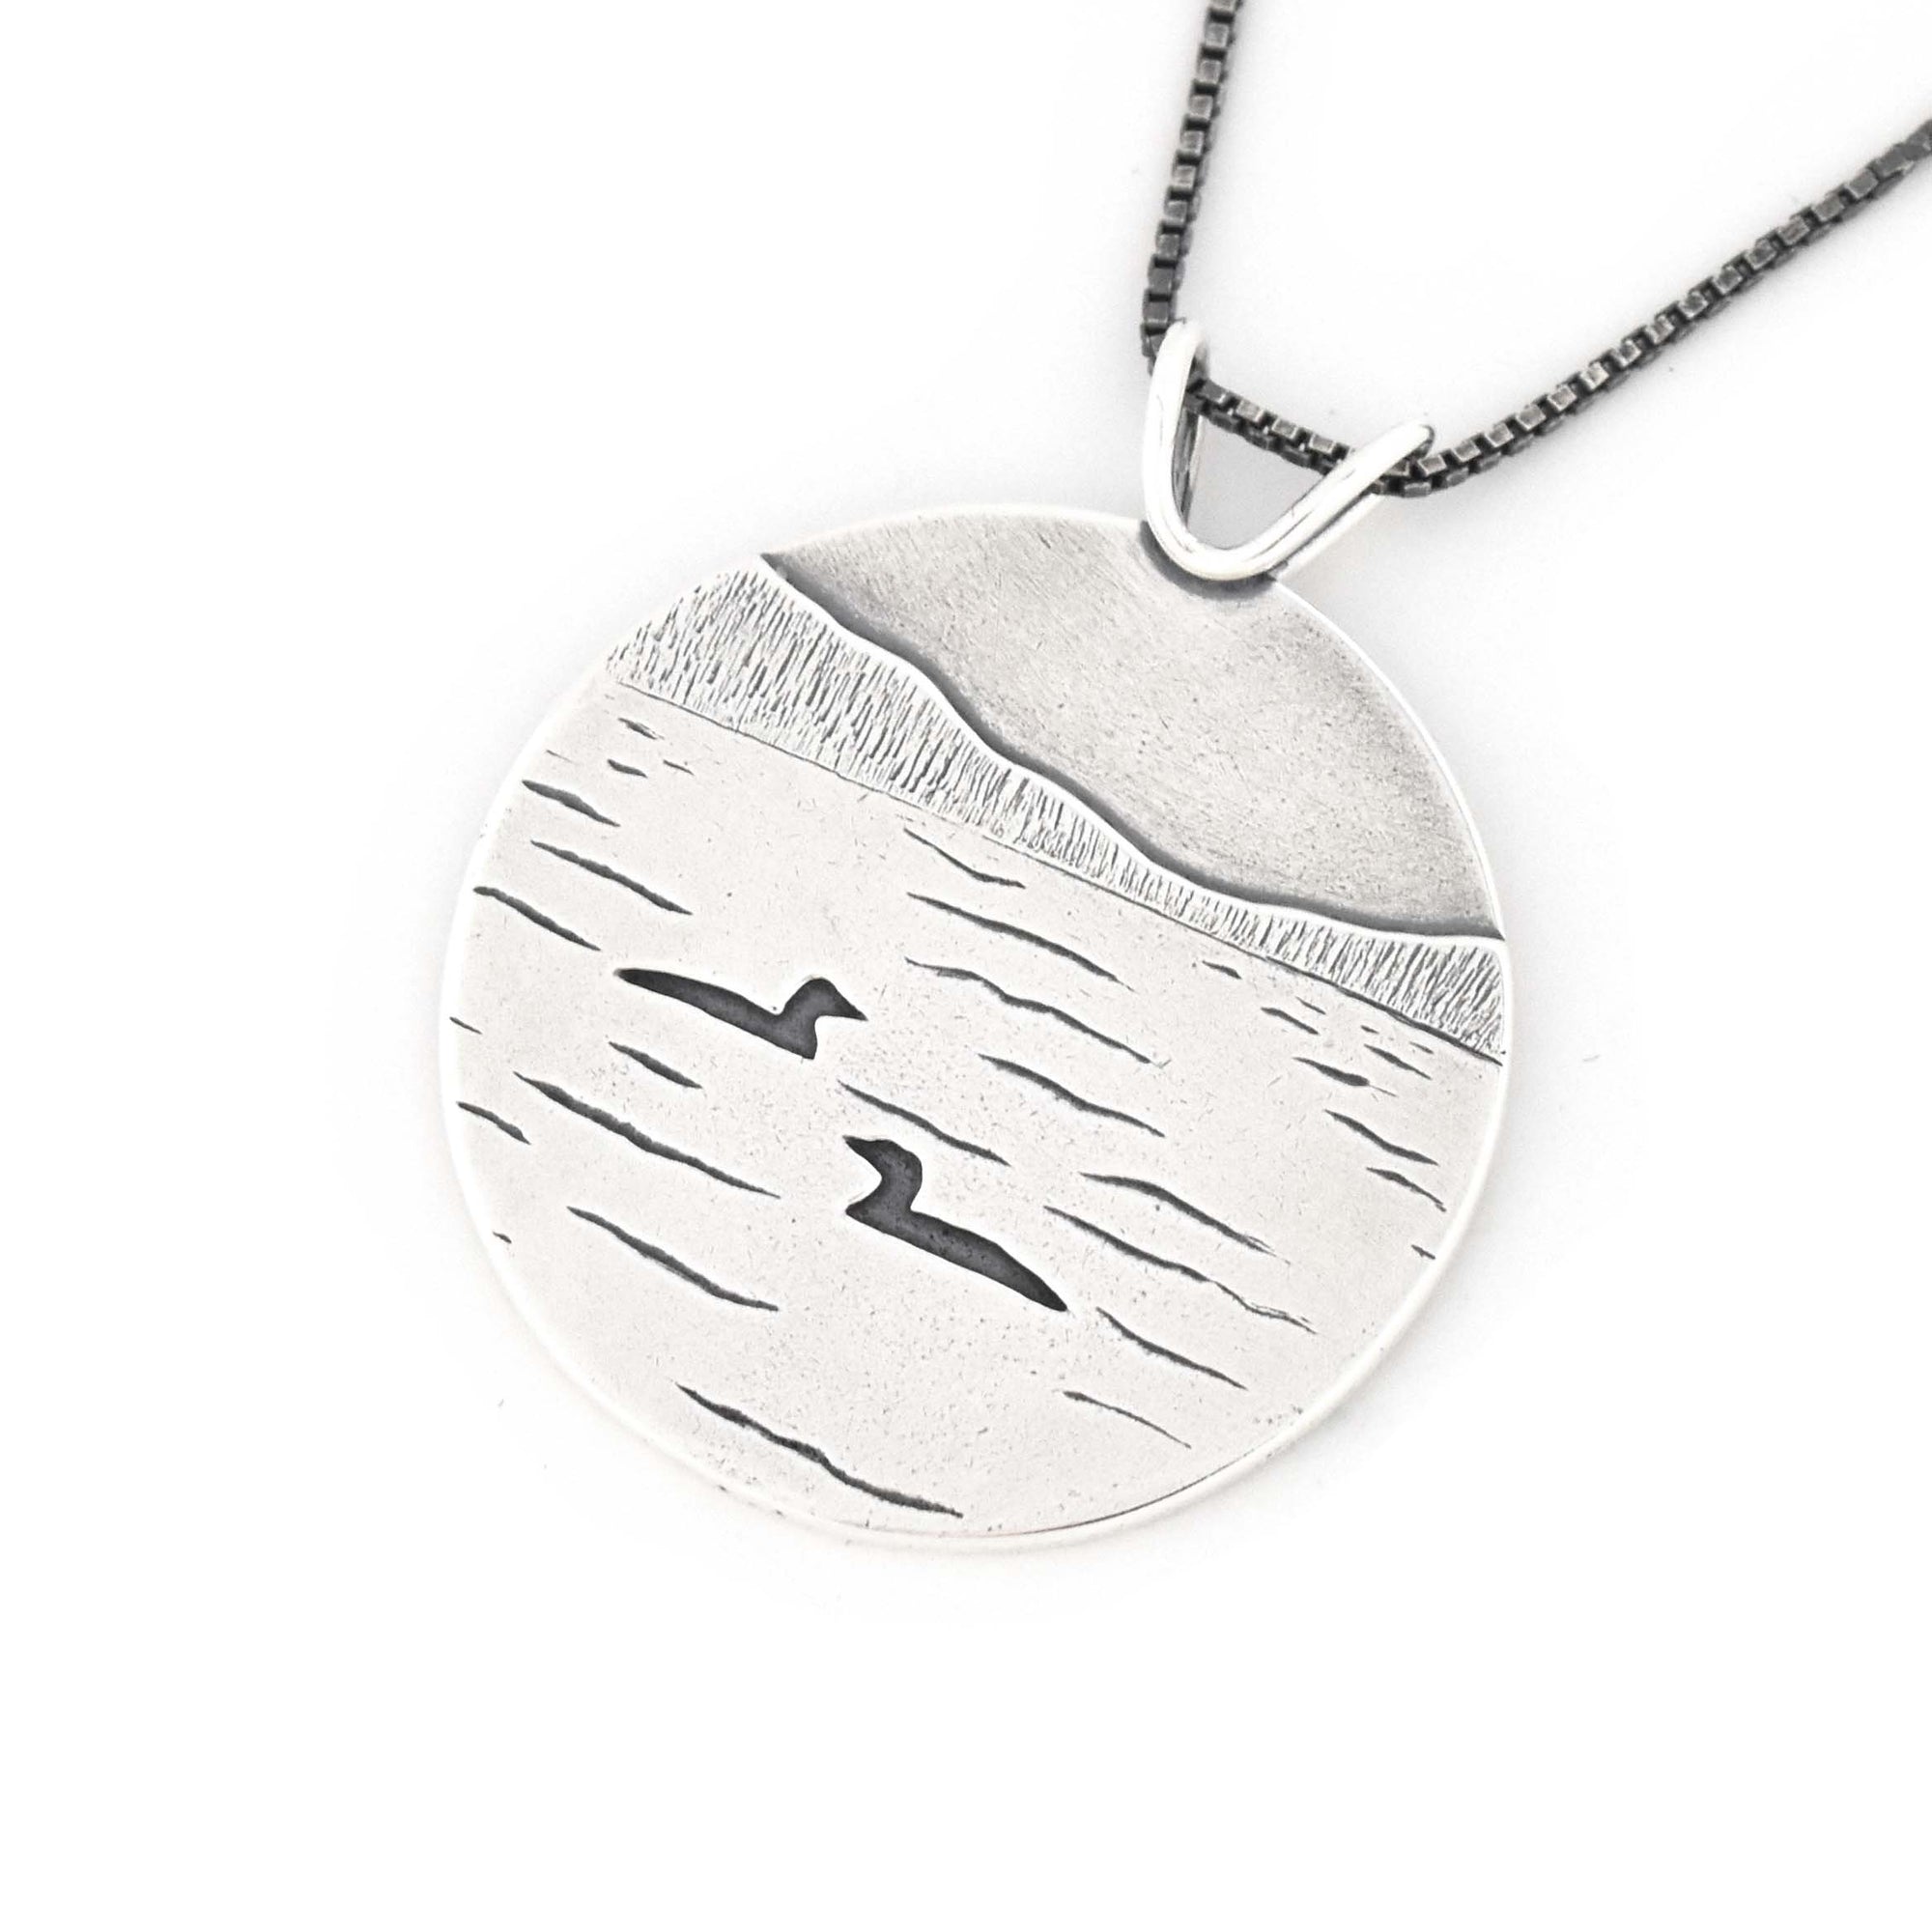 Loon Lake Pendant - Silver Pendant   5485 - handmade by Beth Millner Jewelry